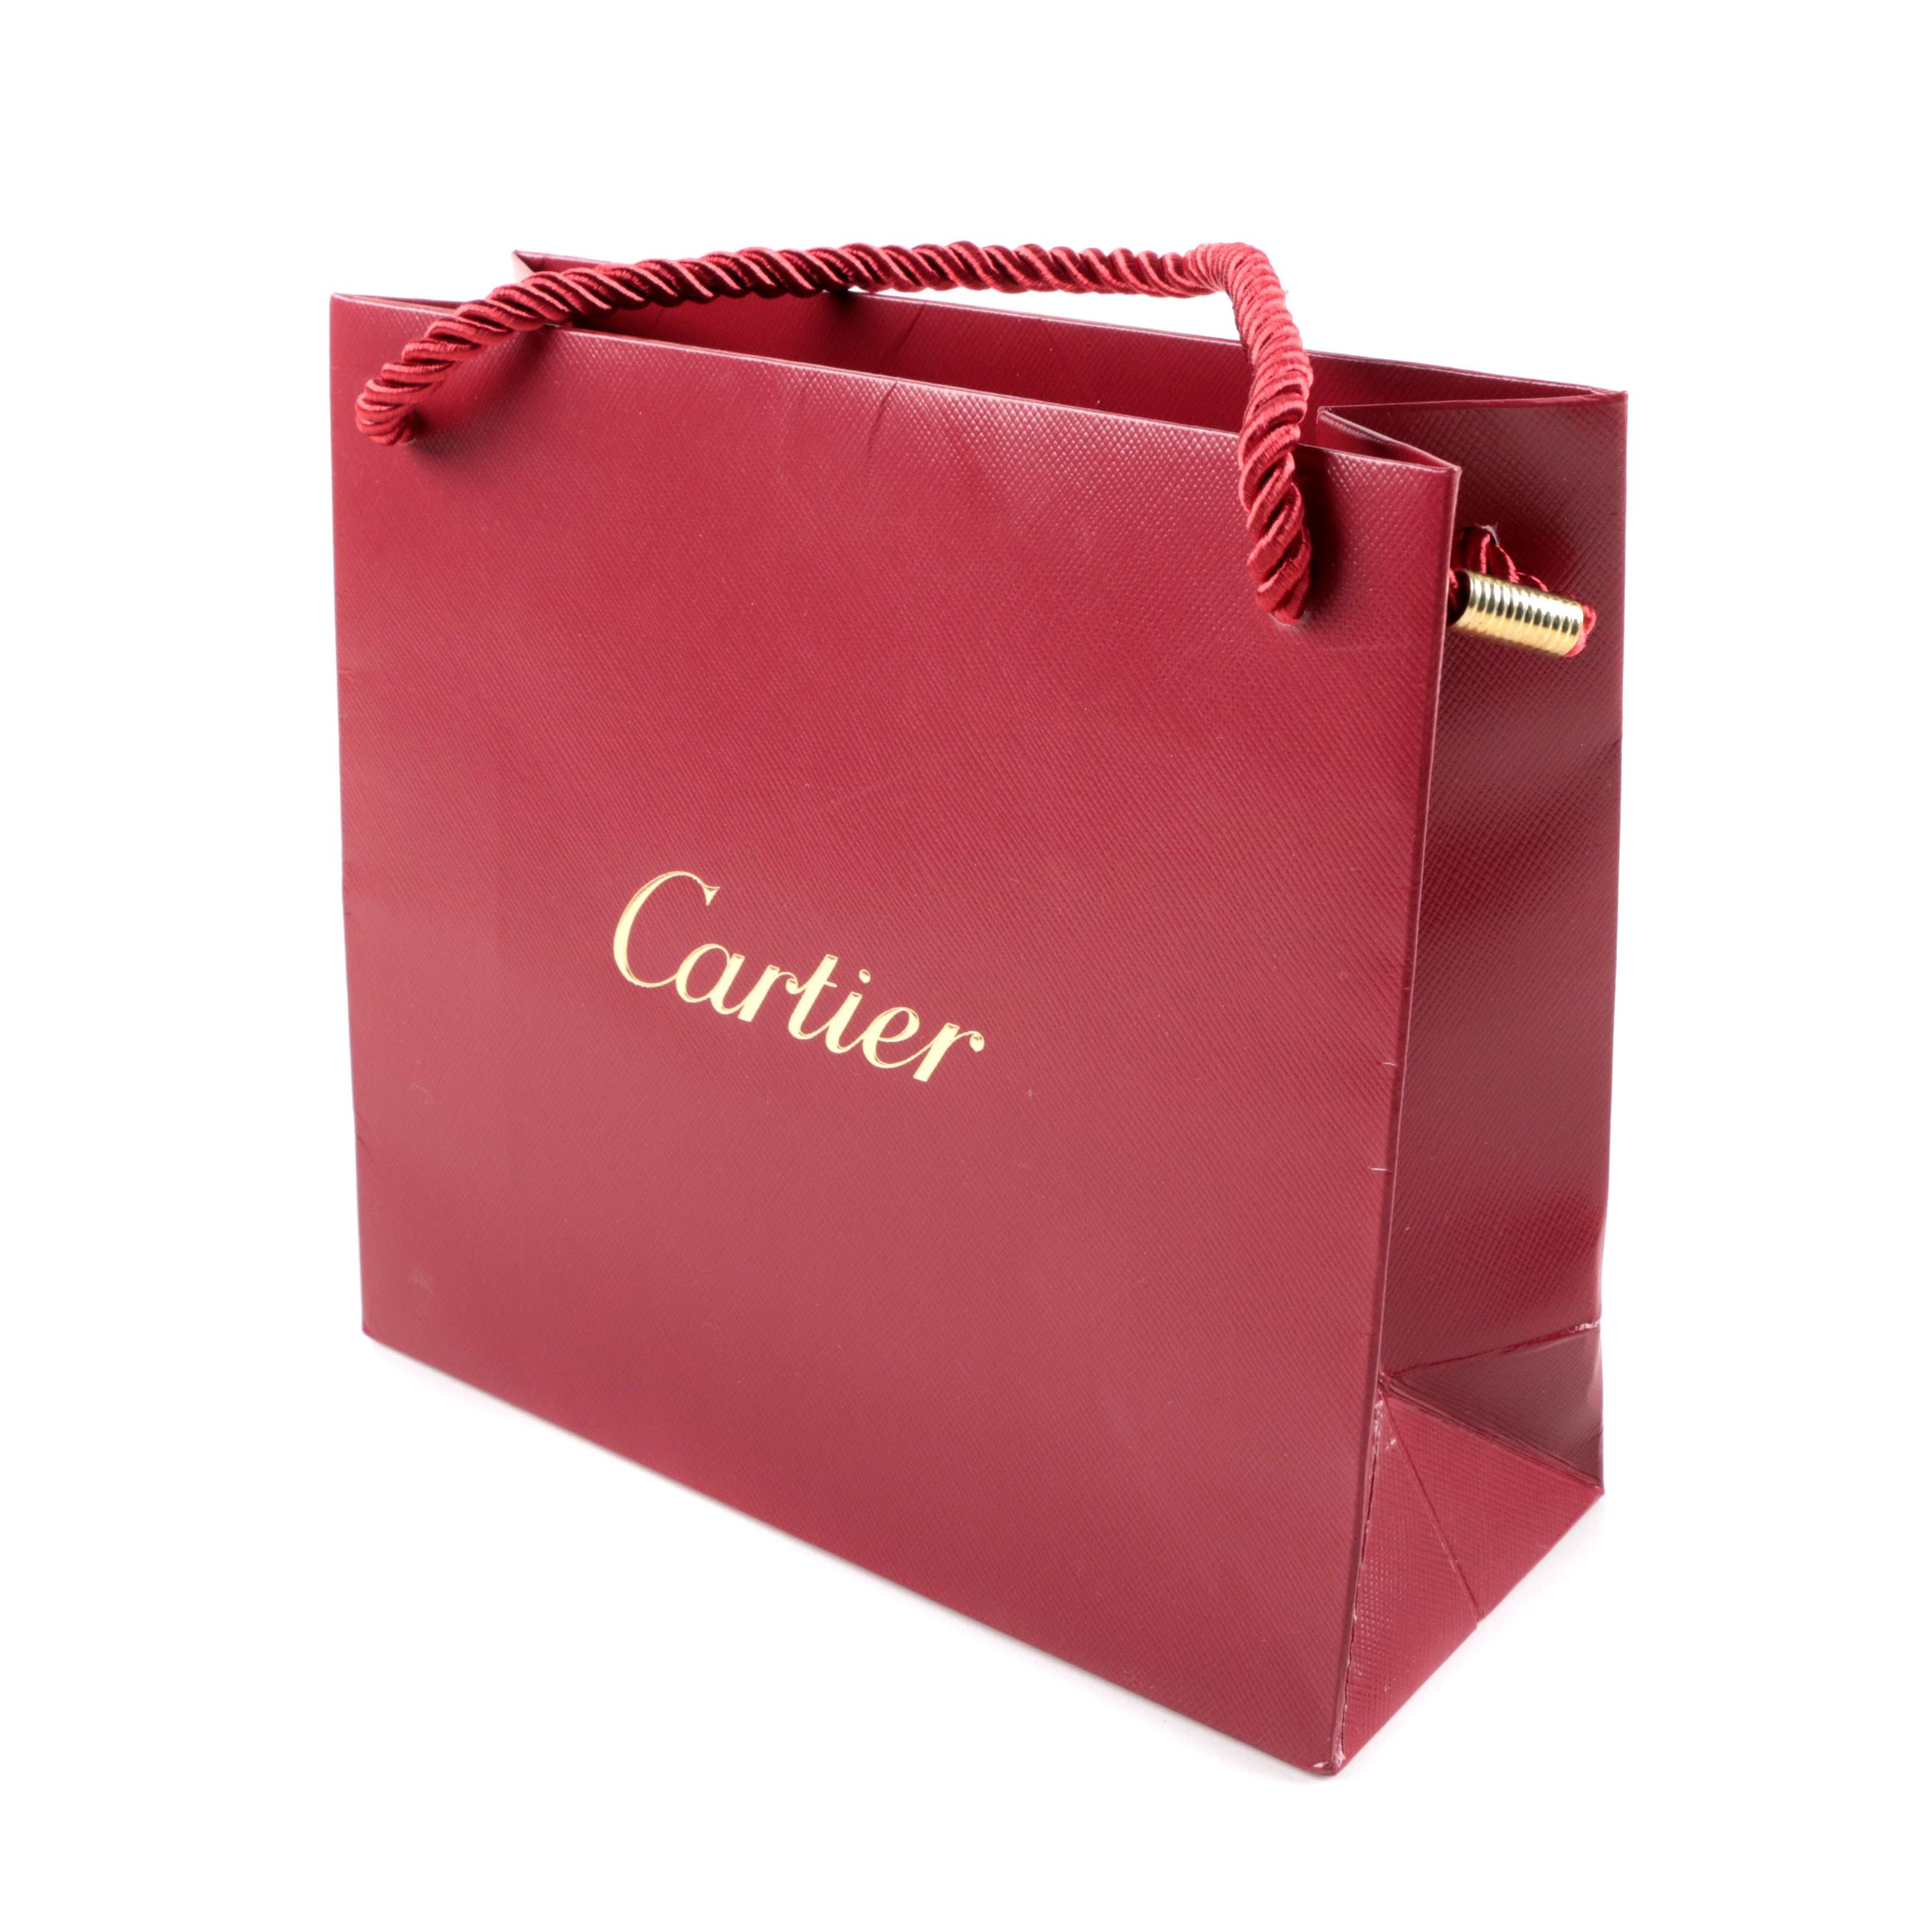 cartier gift bag